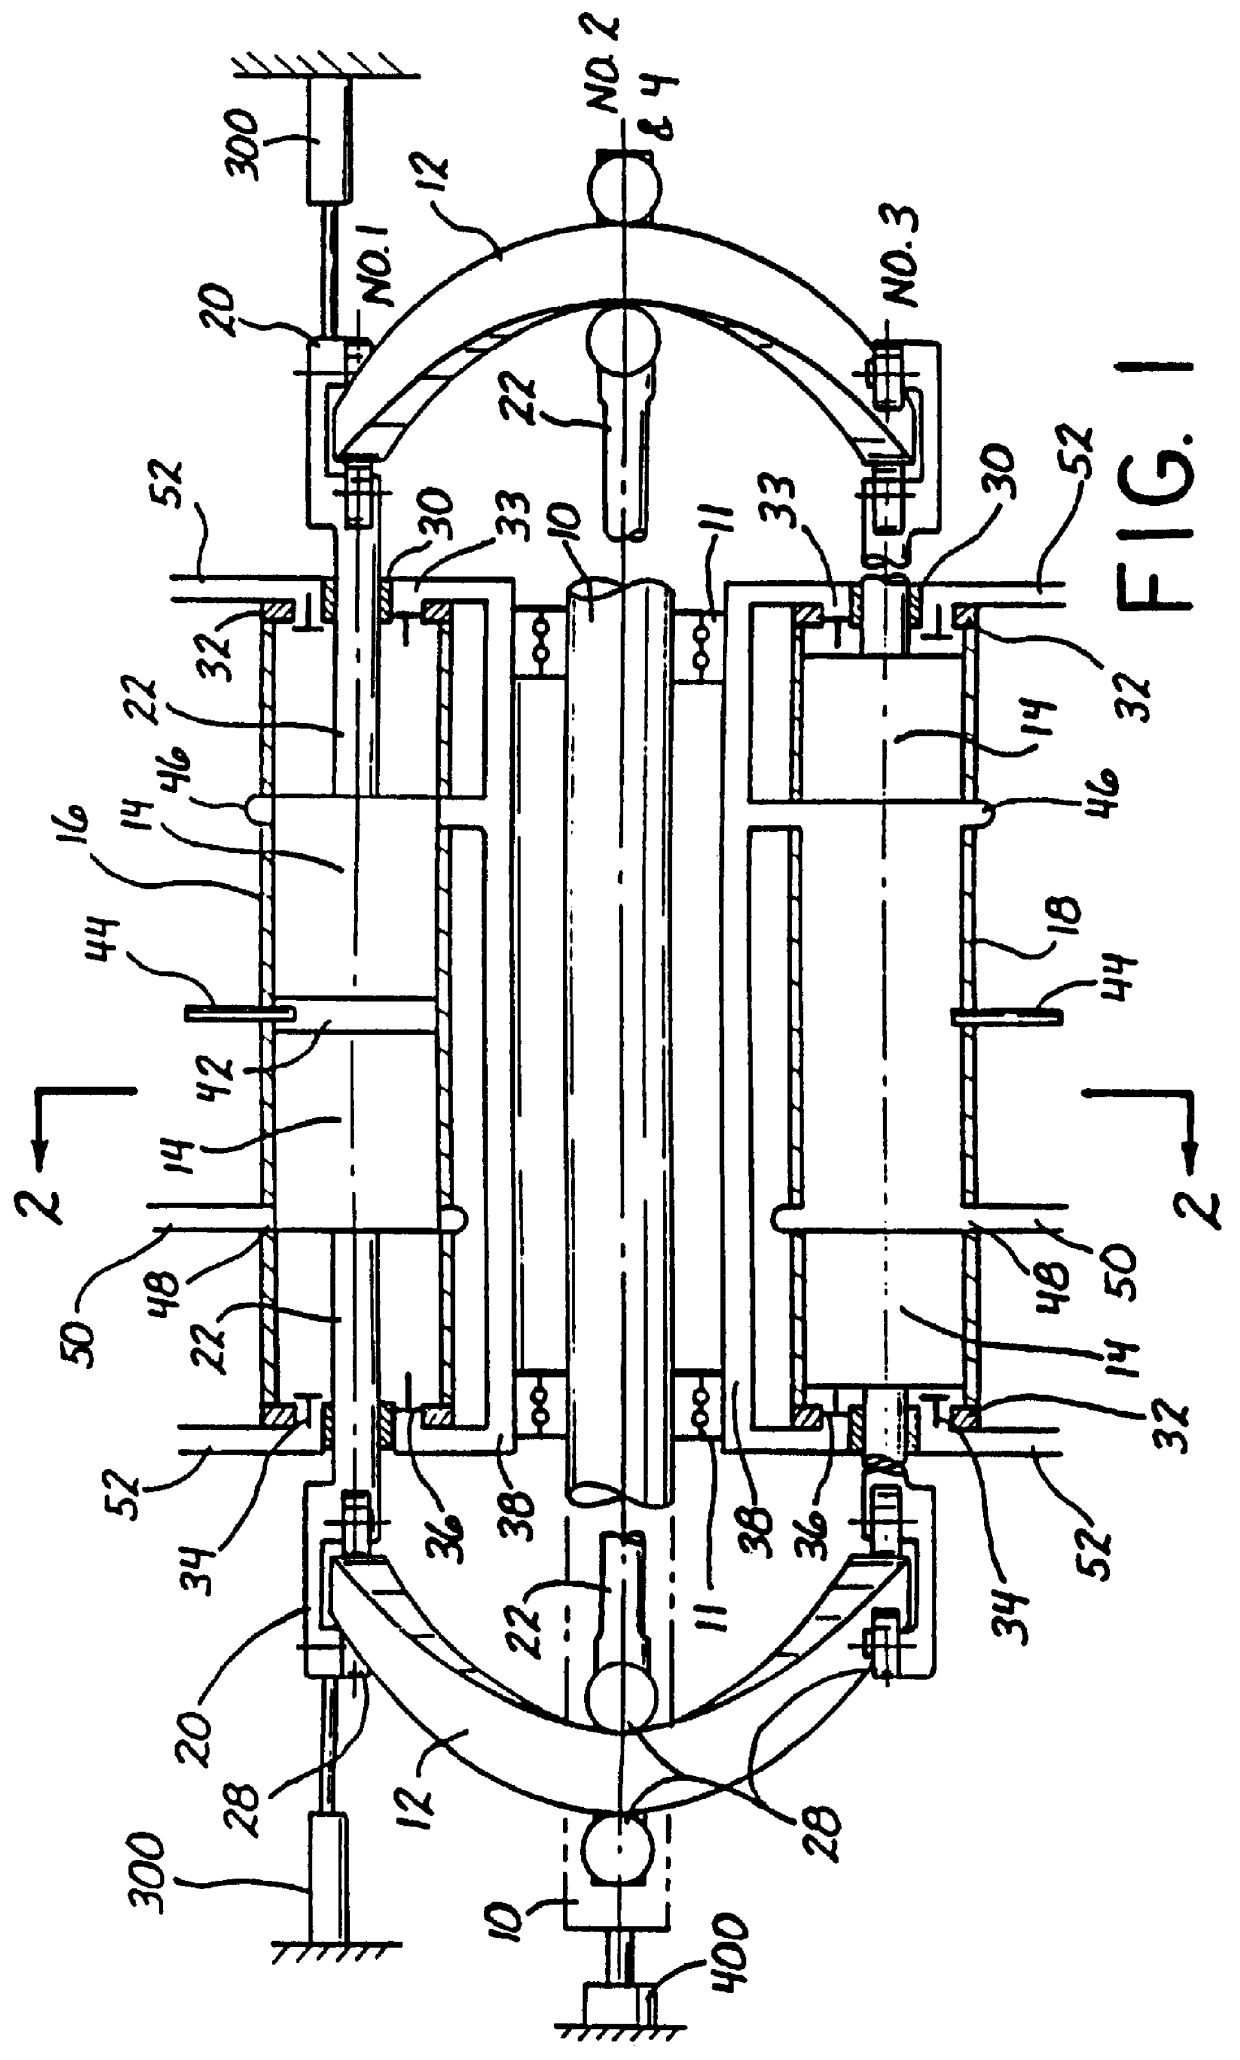 Adiabatic, two-stroke cycle engine having novel combustion chamber